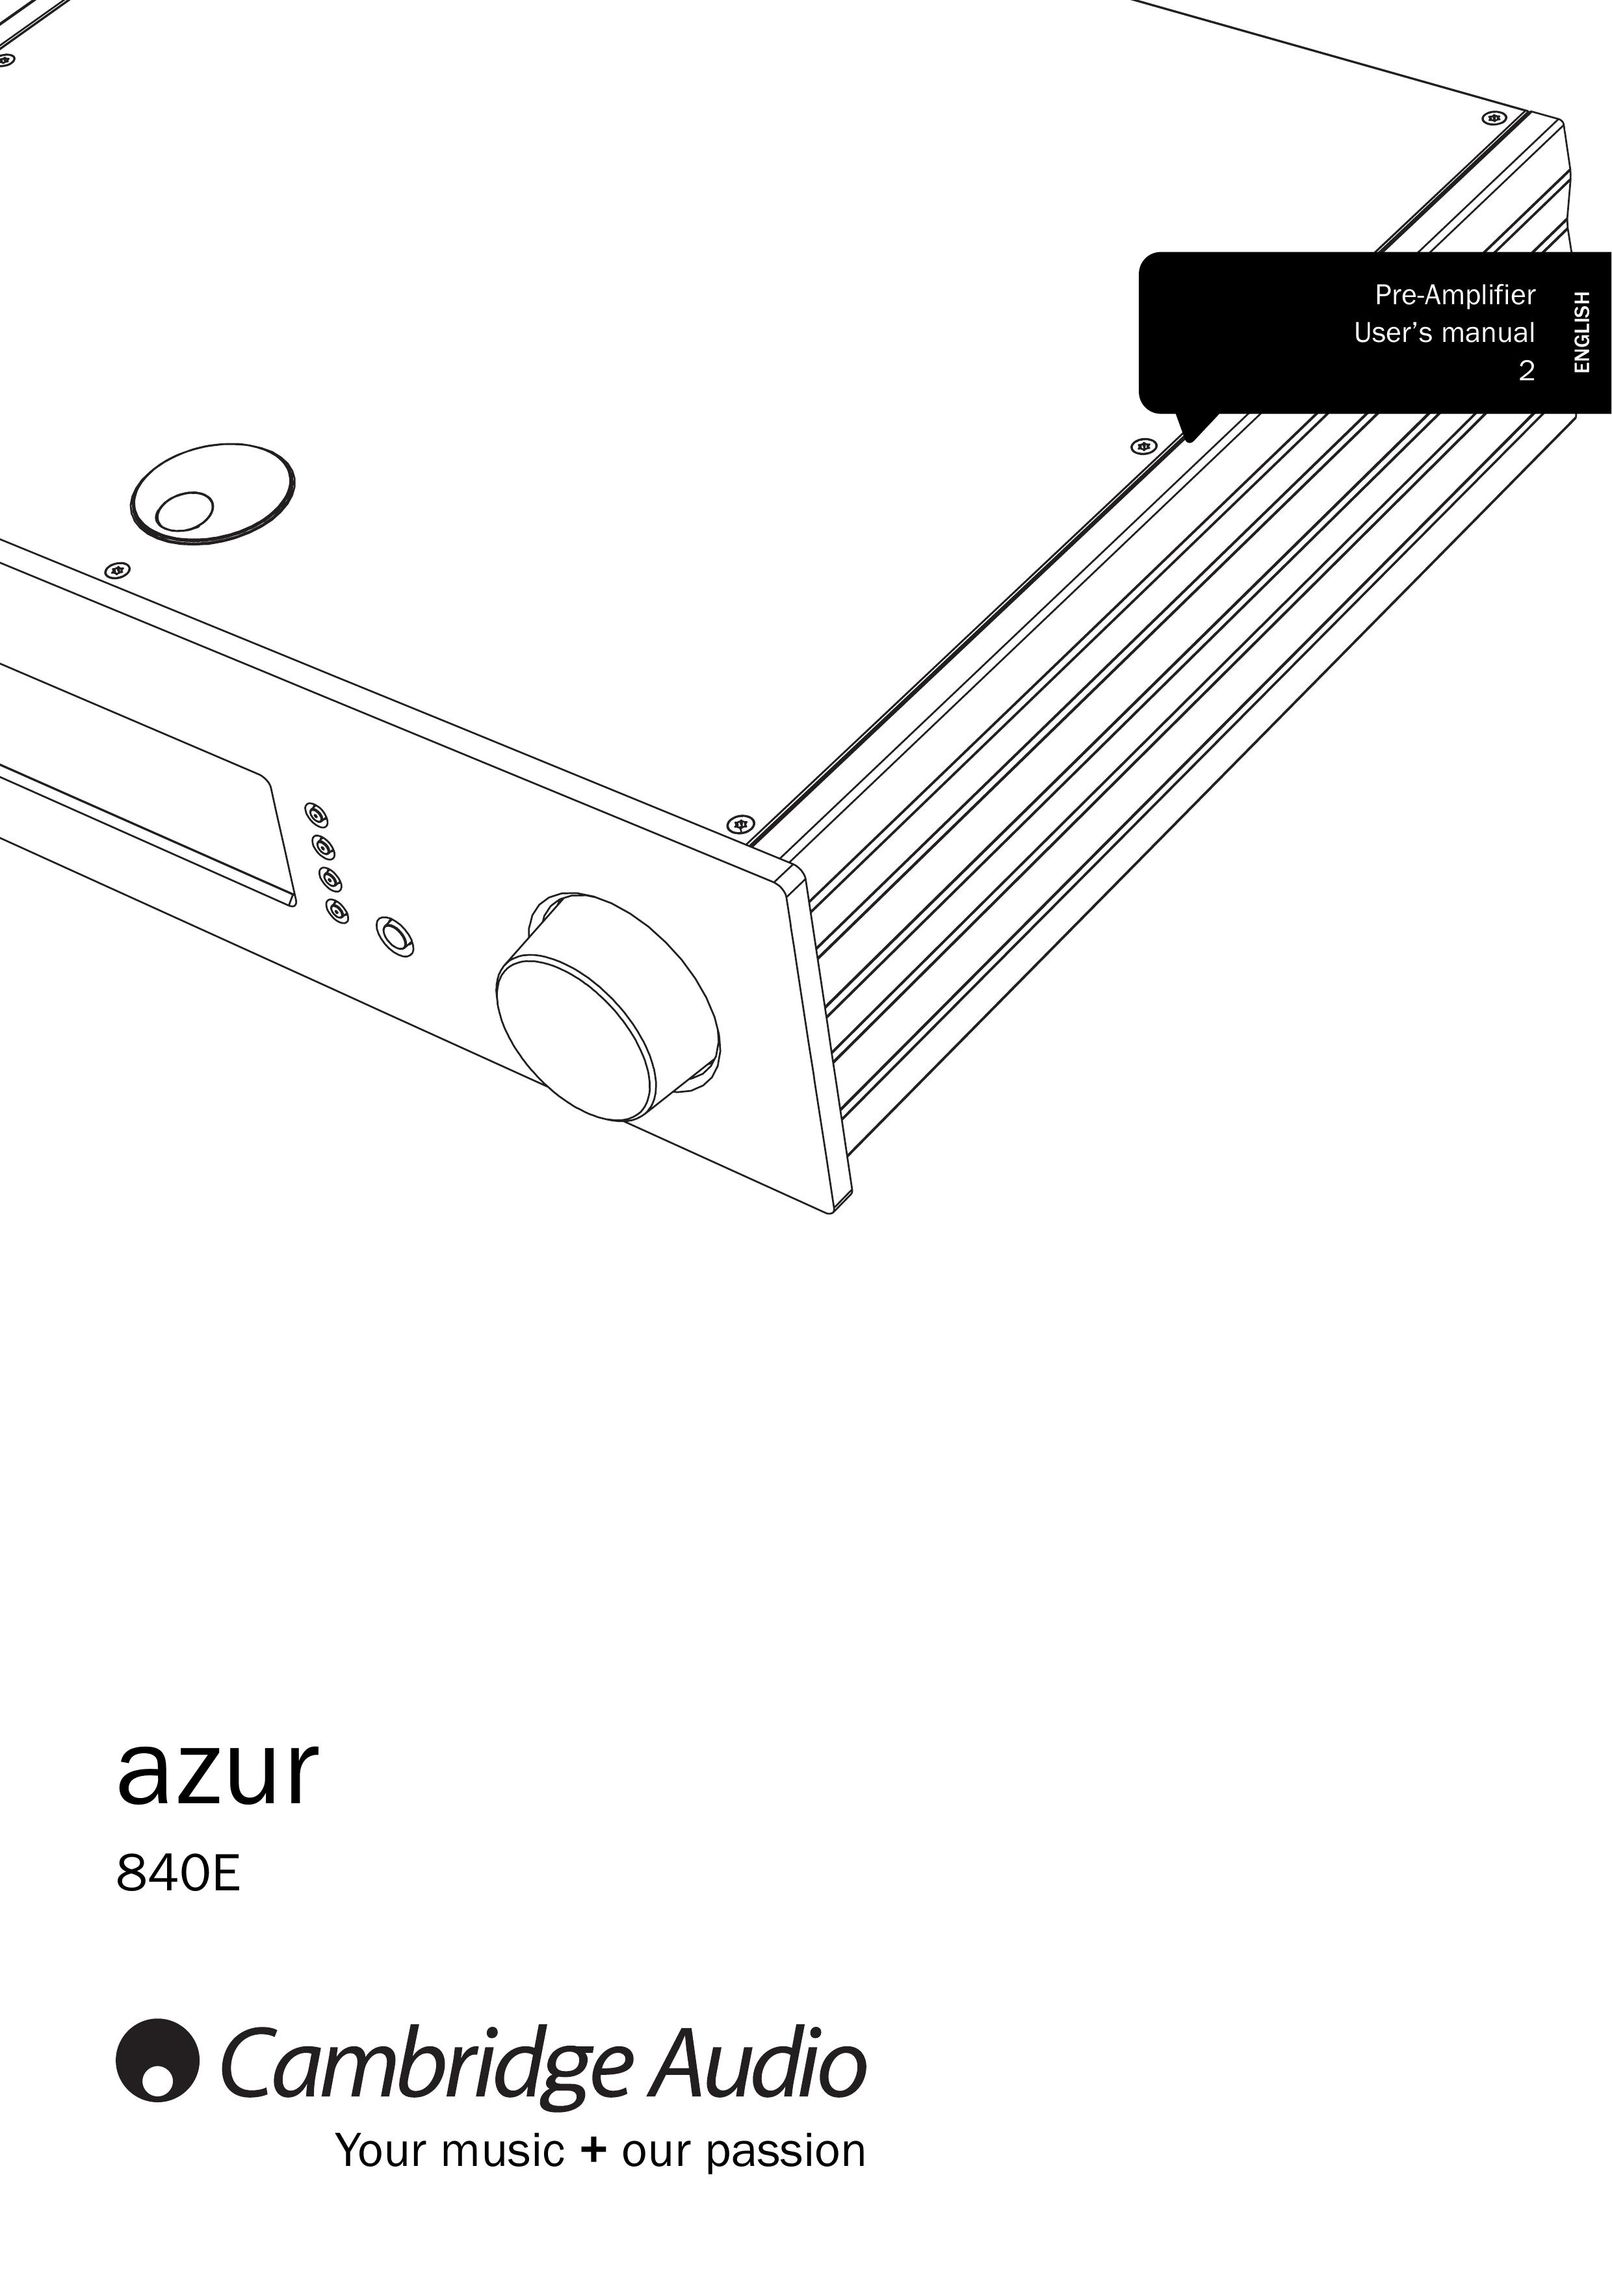 Cambridge Audio Azur 840E Stereo Amplifier User Manual